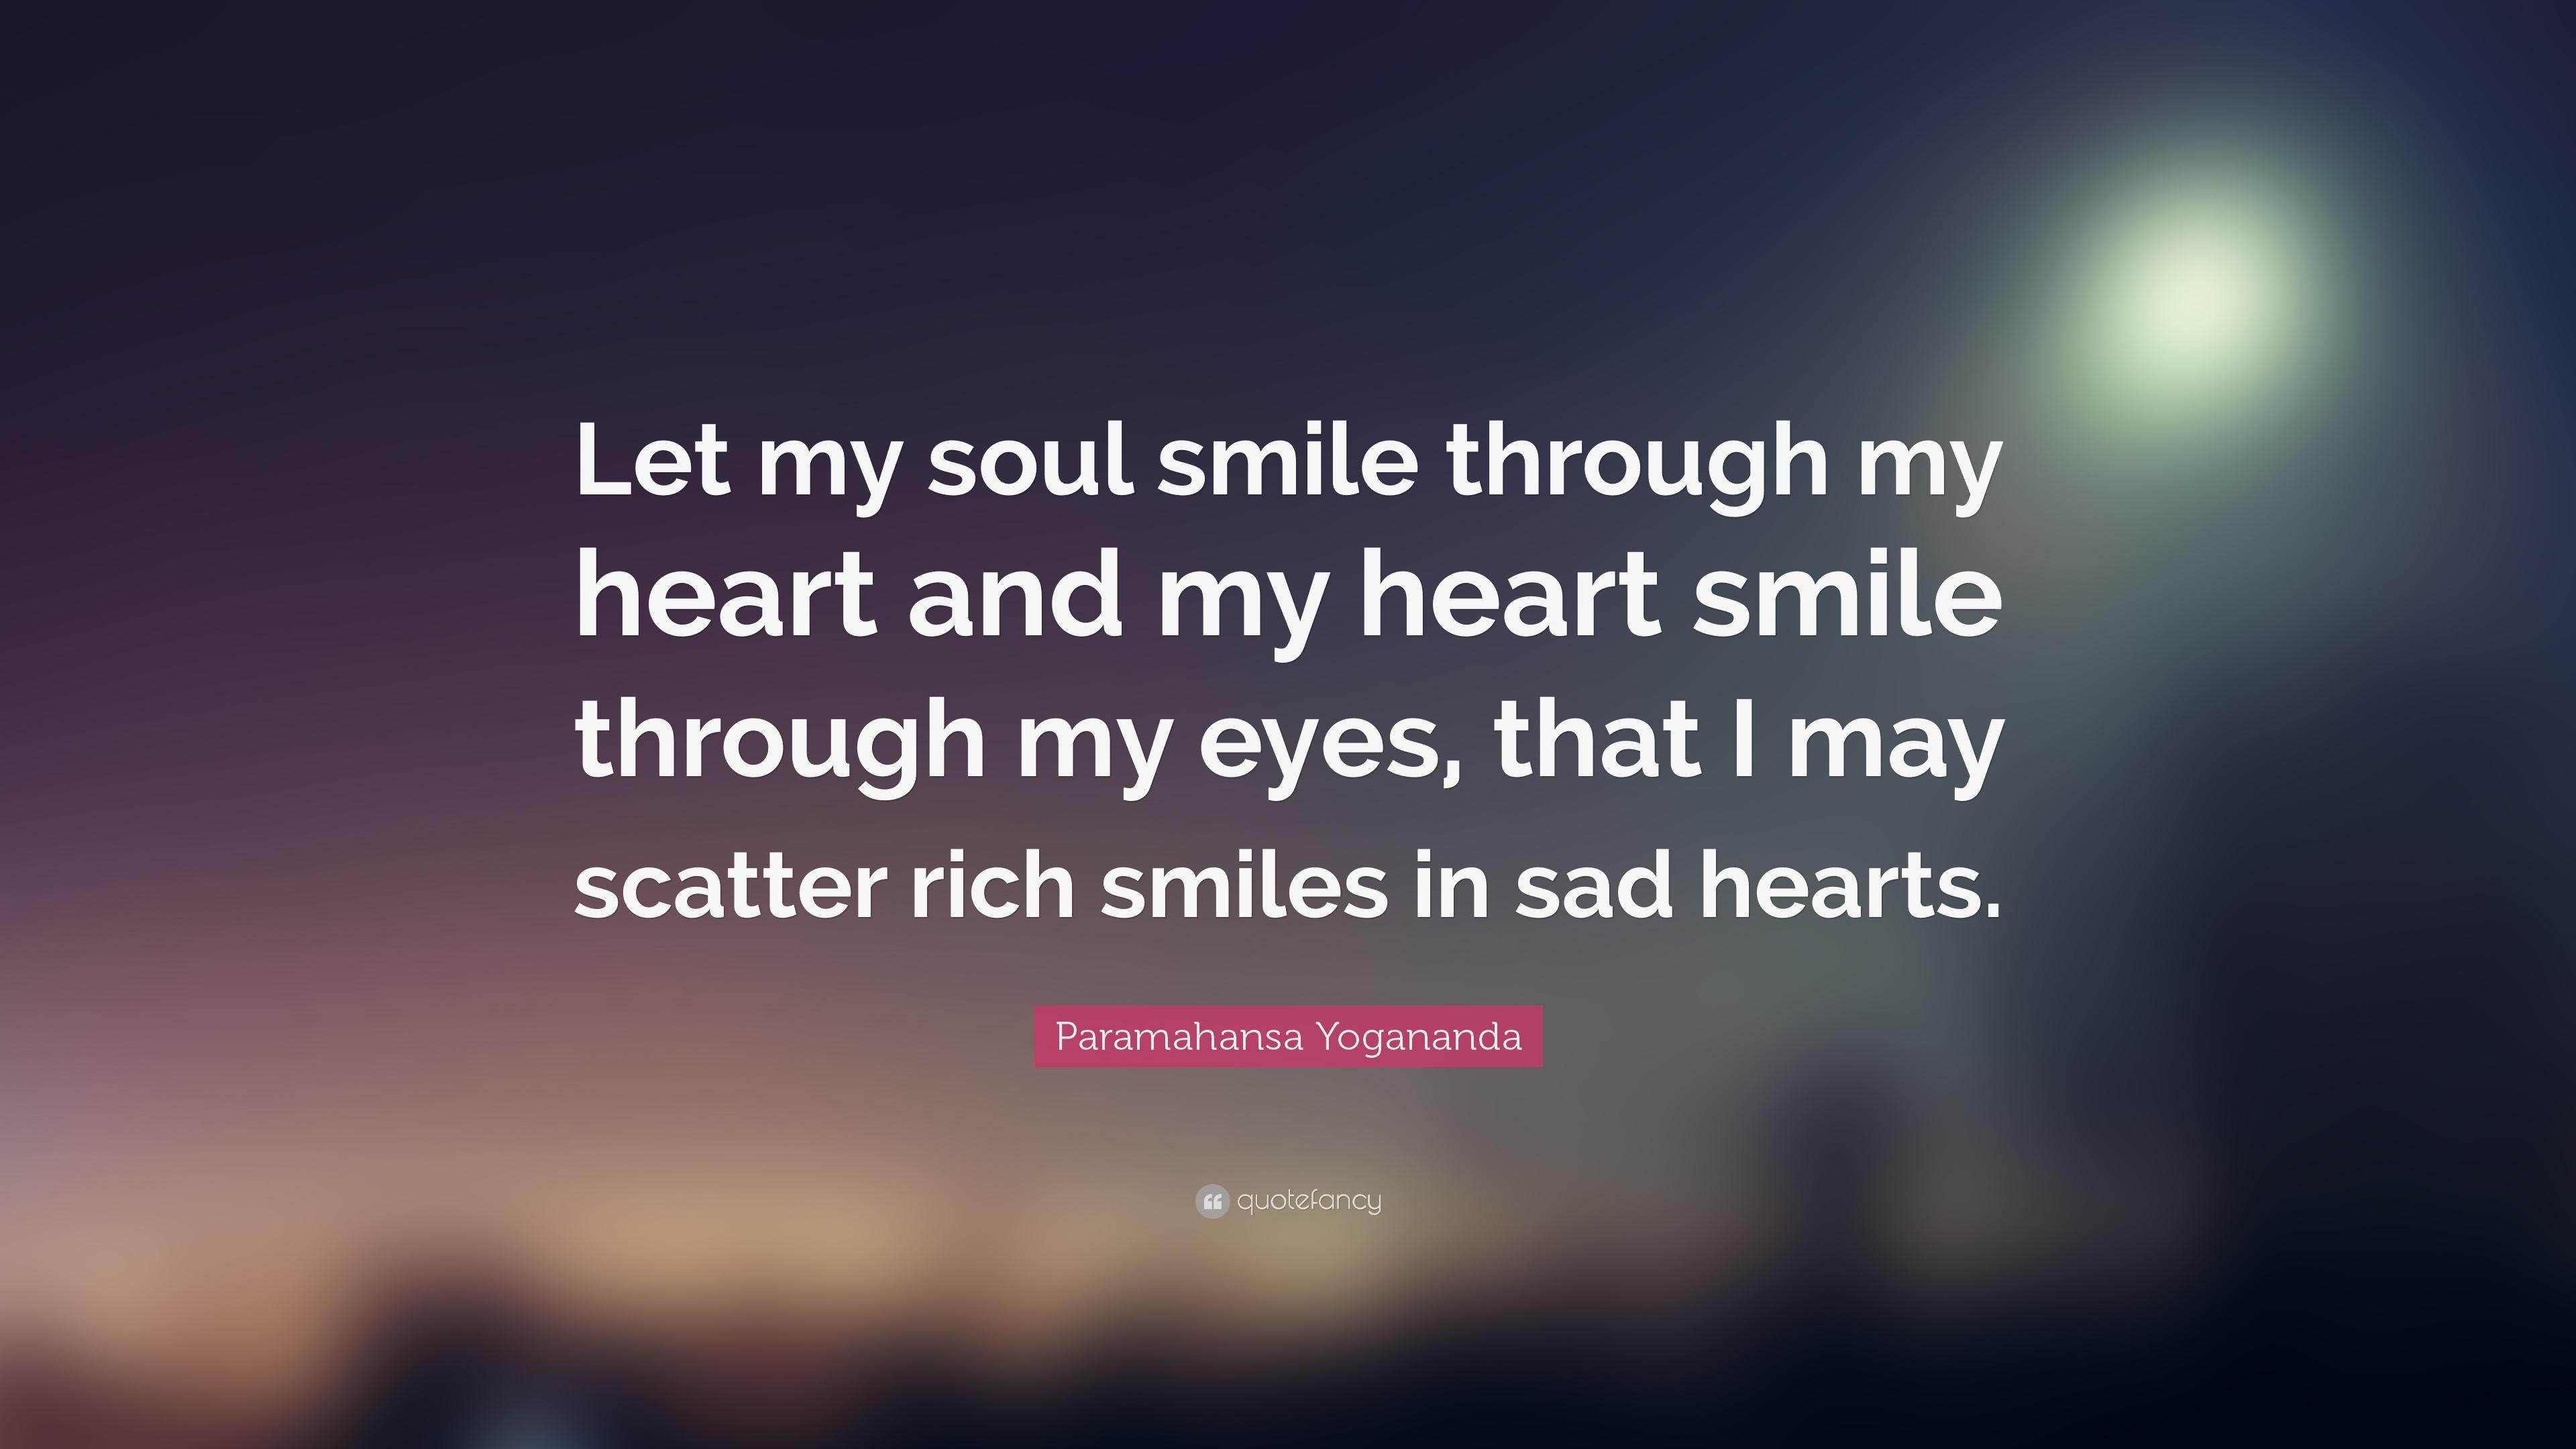 Paramahansa Yogananda Quote: “Let my soul smile through my heart